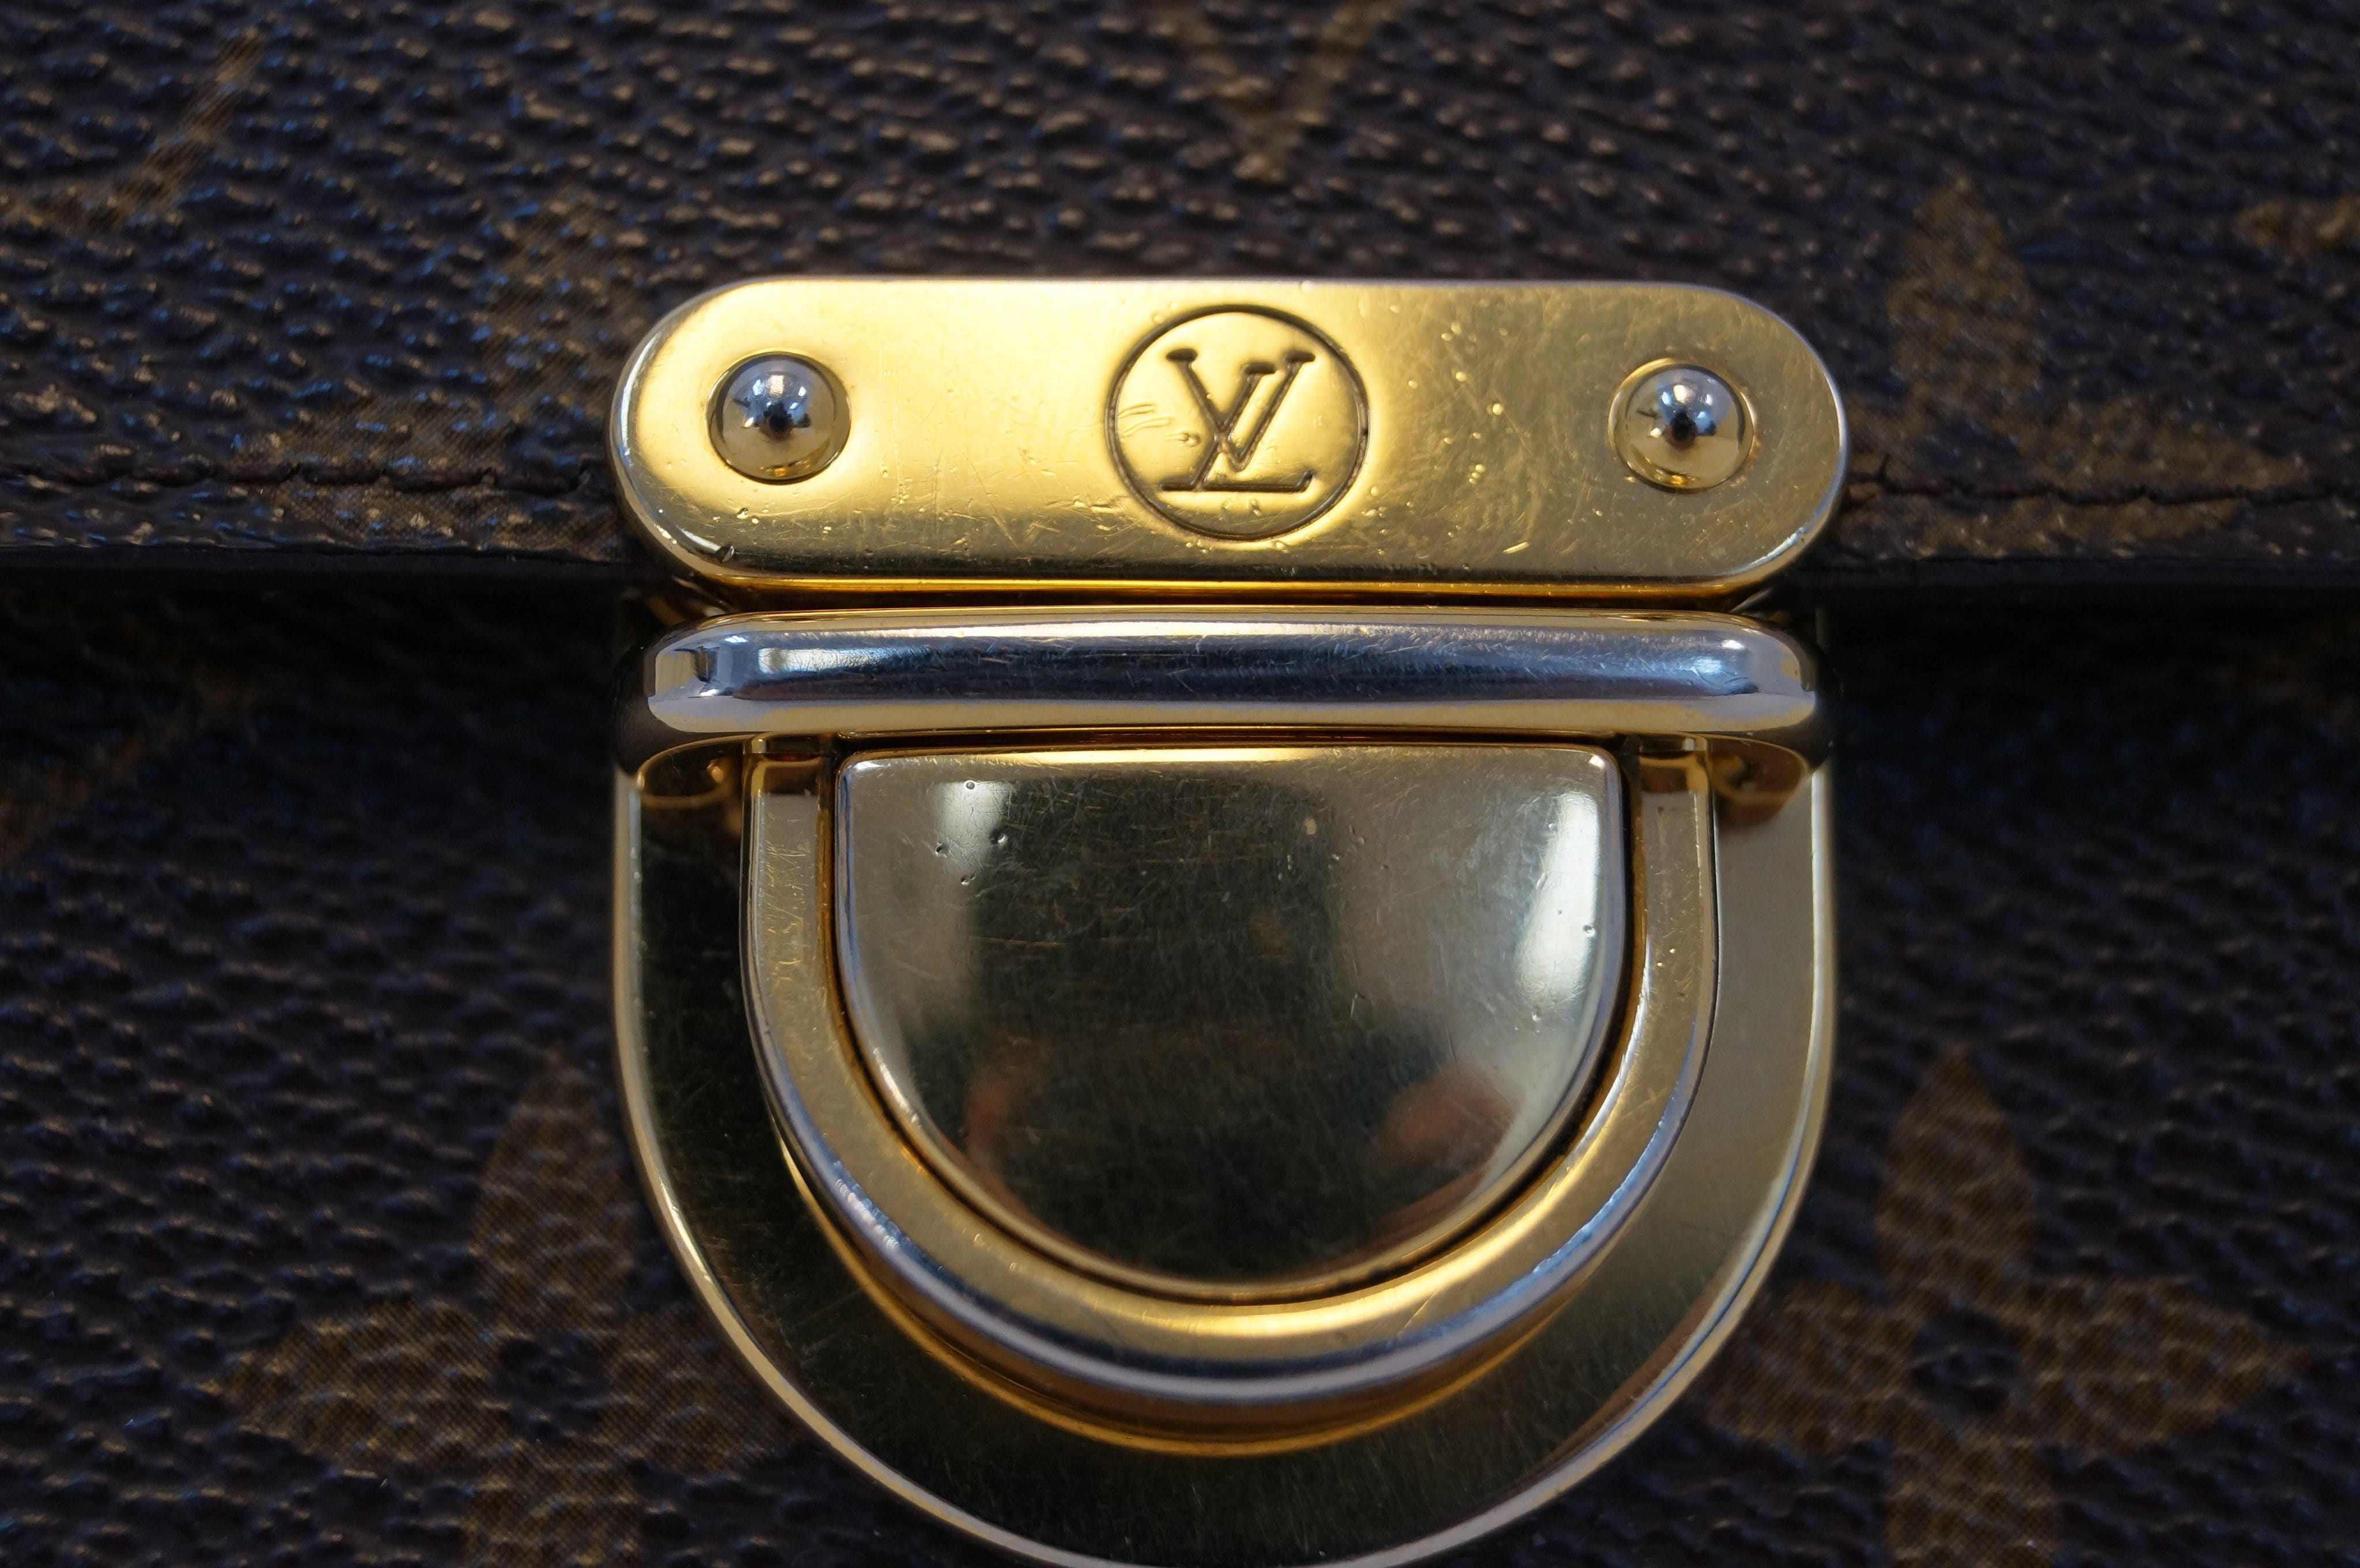 Louis Vuitton Brown Monogram Koala Wallet – The Closet